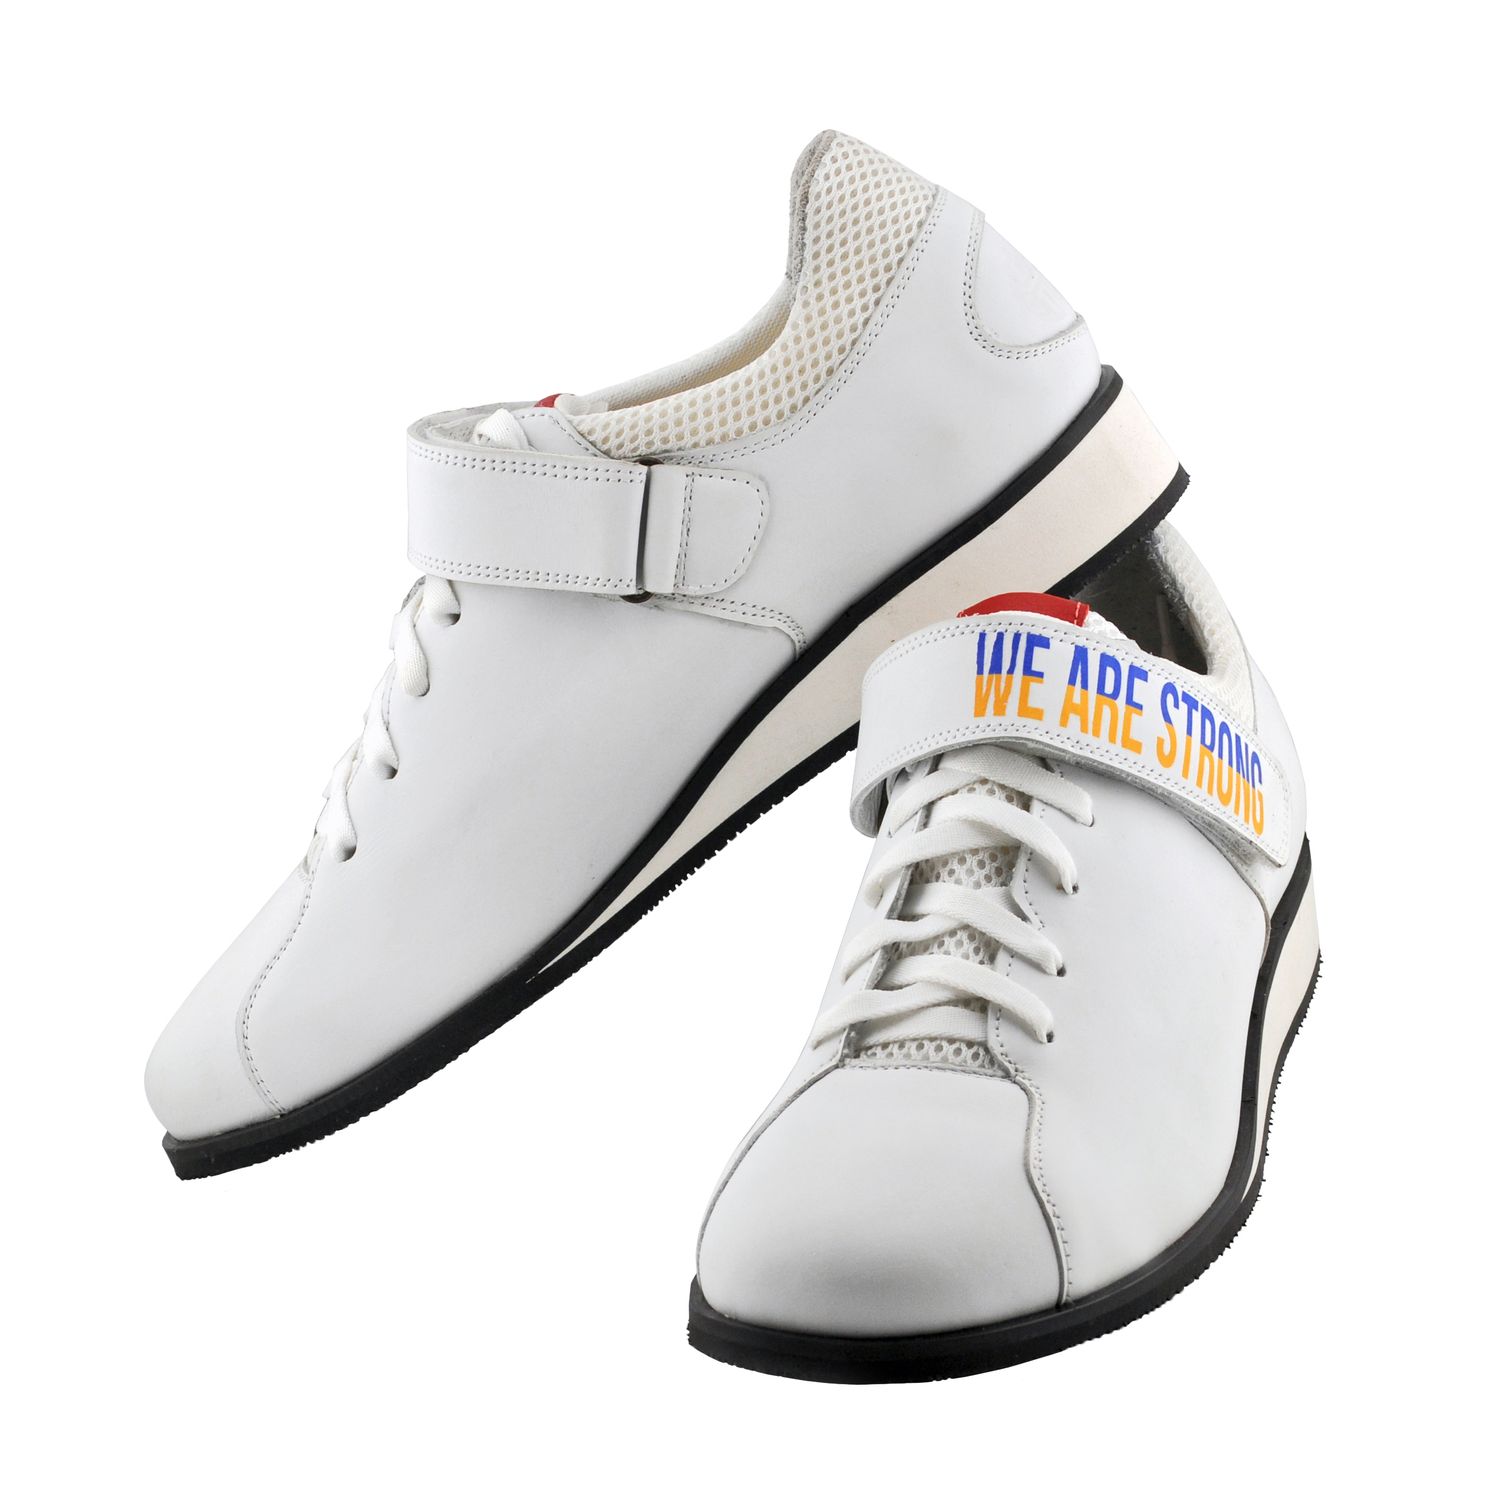 Anatomic Sneakers Zhabotinsky, white, size 40 (UKR)